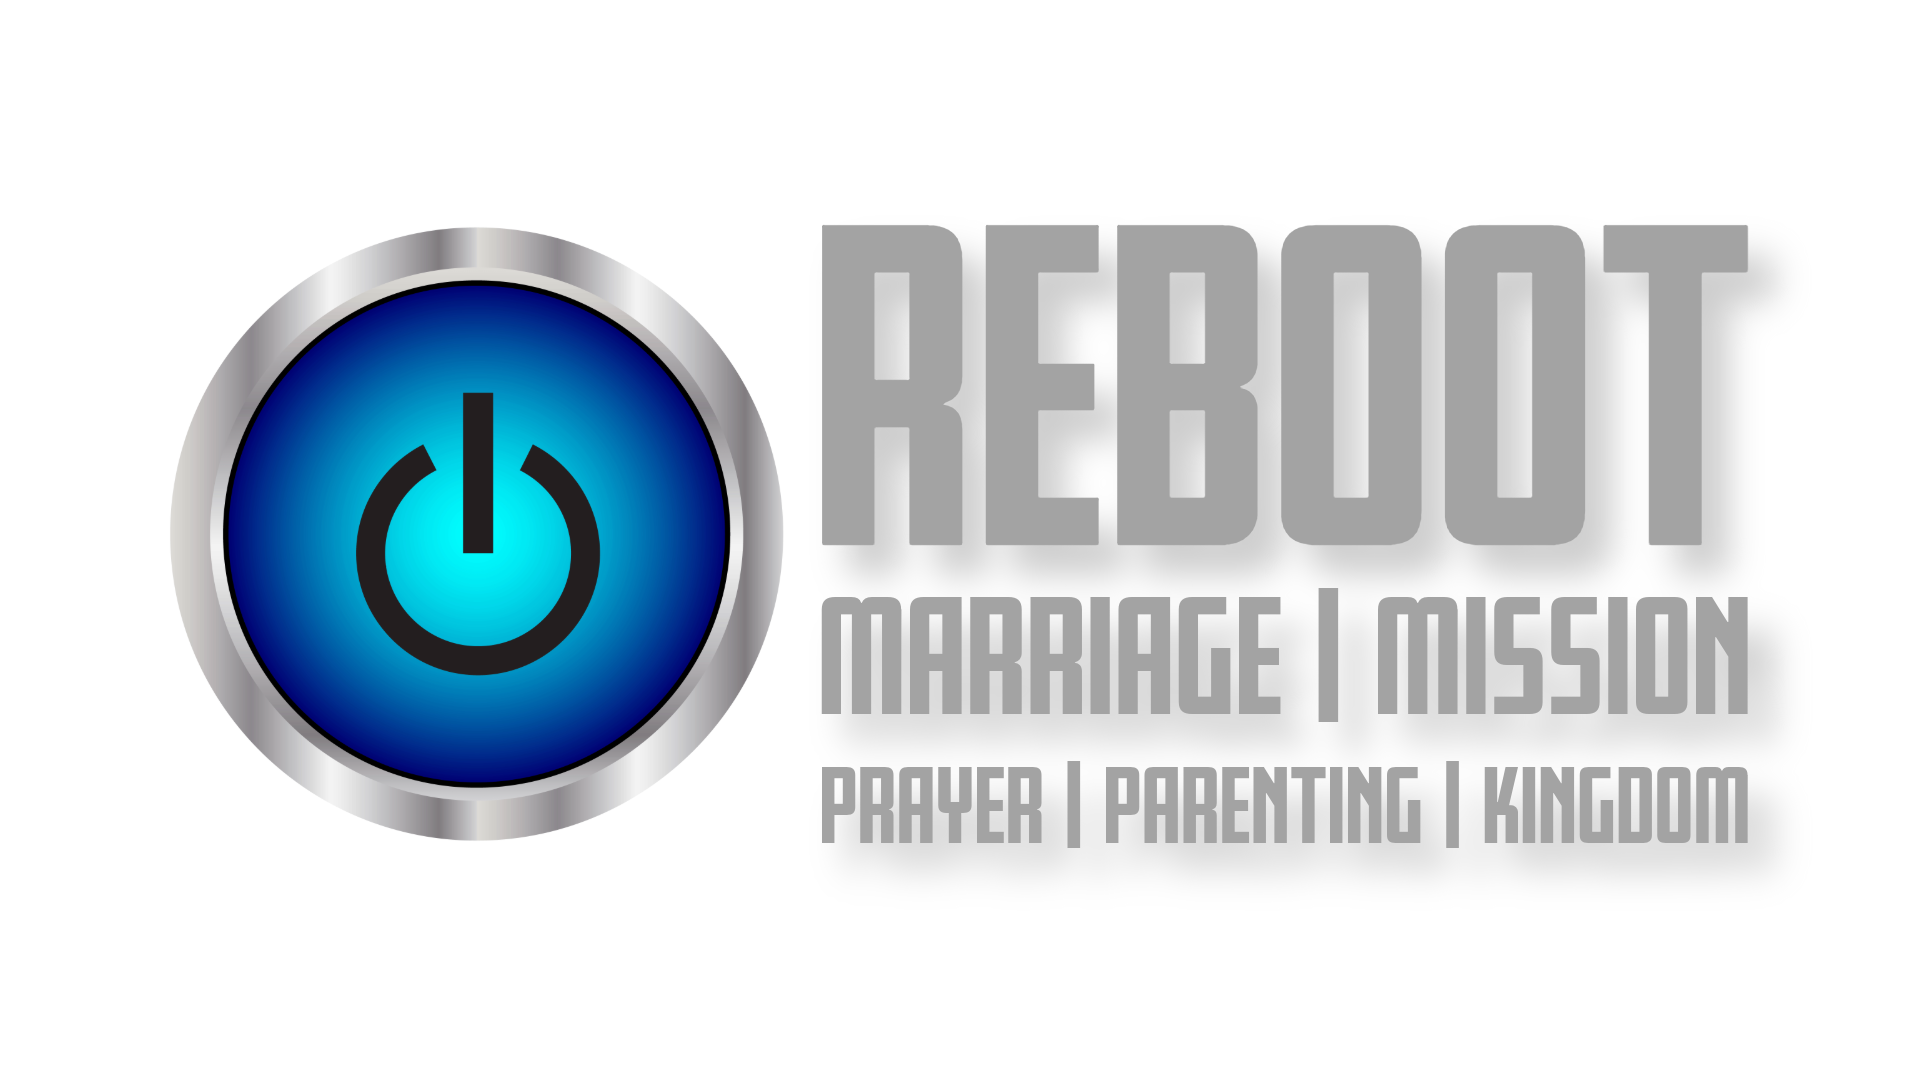 Reboot: Prayer